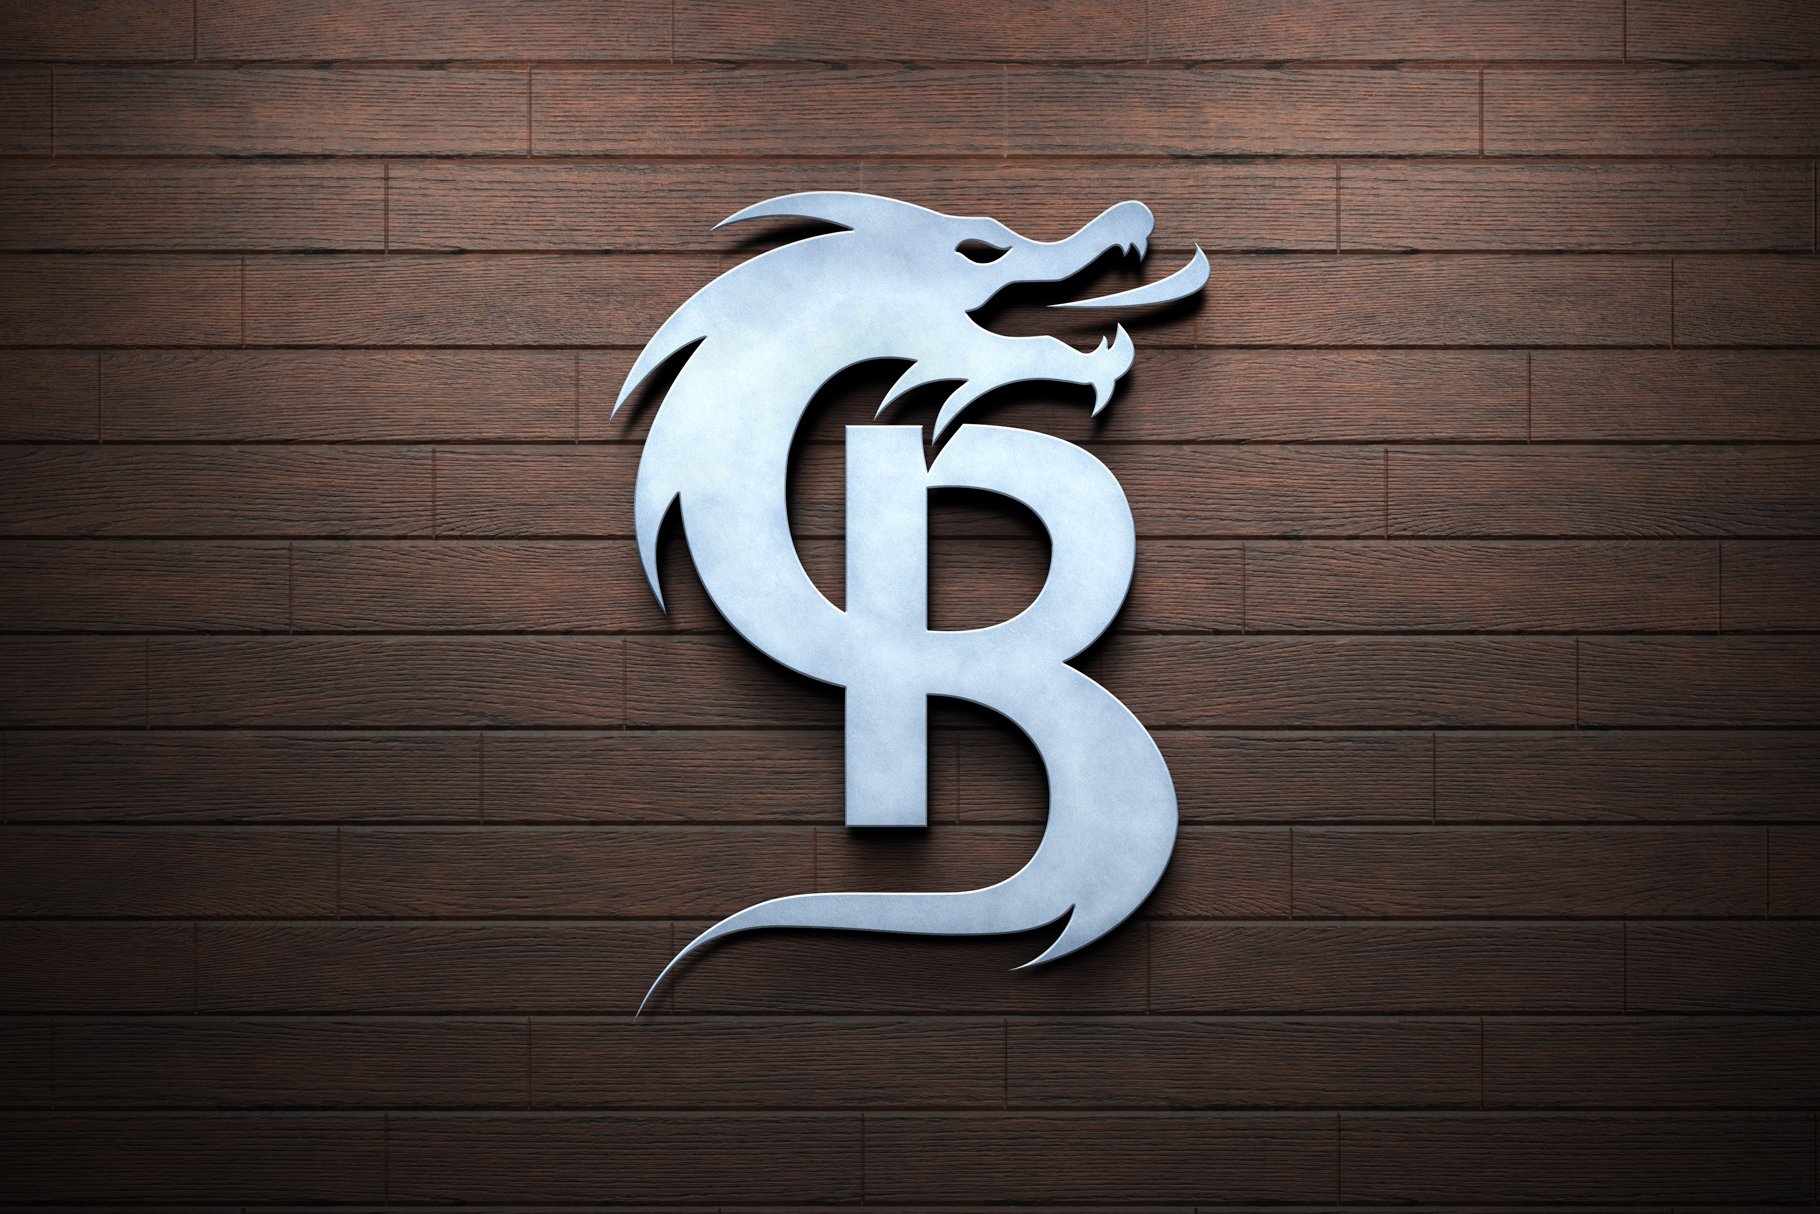 Dragon B Logo cover image.